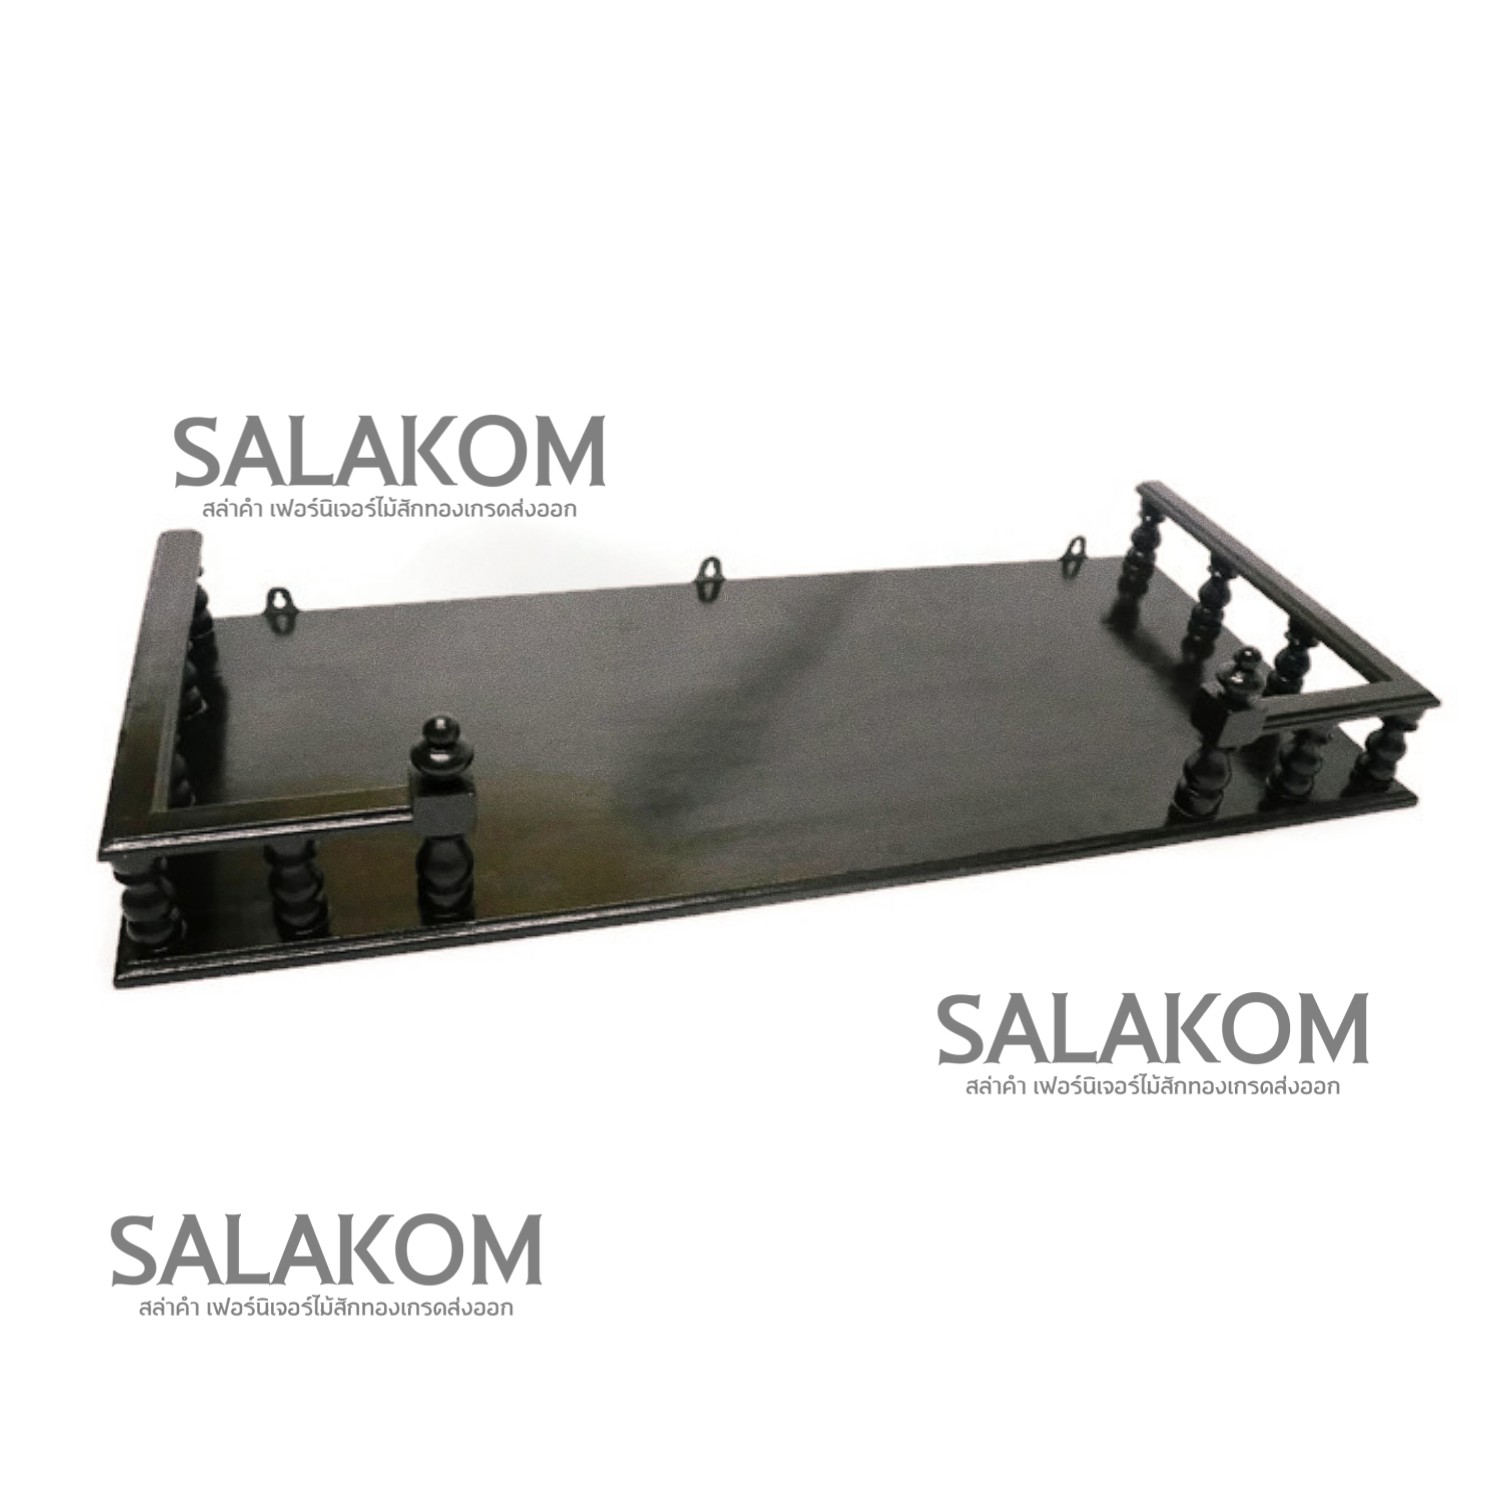 Salakom หิ้งวางพระ ติดผนัง ไม้สักแท้ ขนาด 80*38 เซนต์. สีดำ หน้าเหลี่ยม หิ้งพระไม้สักแขวนผนัง Buddha's shelf